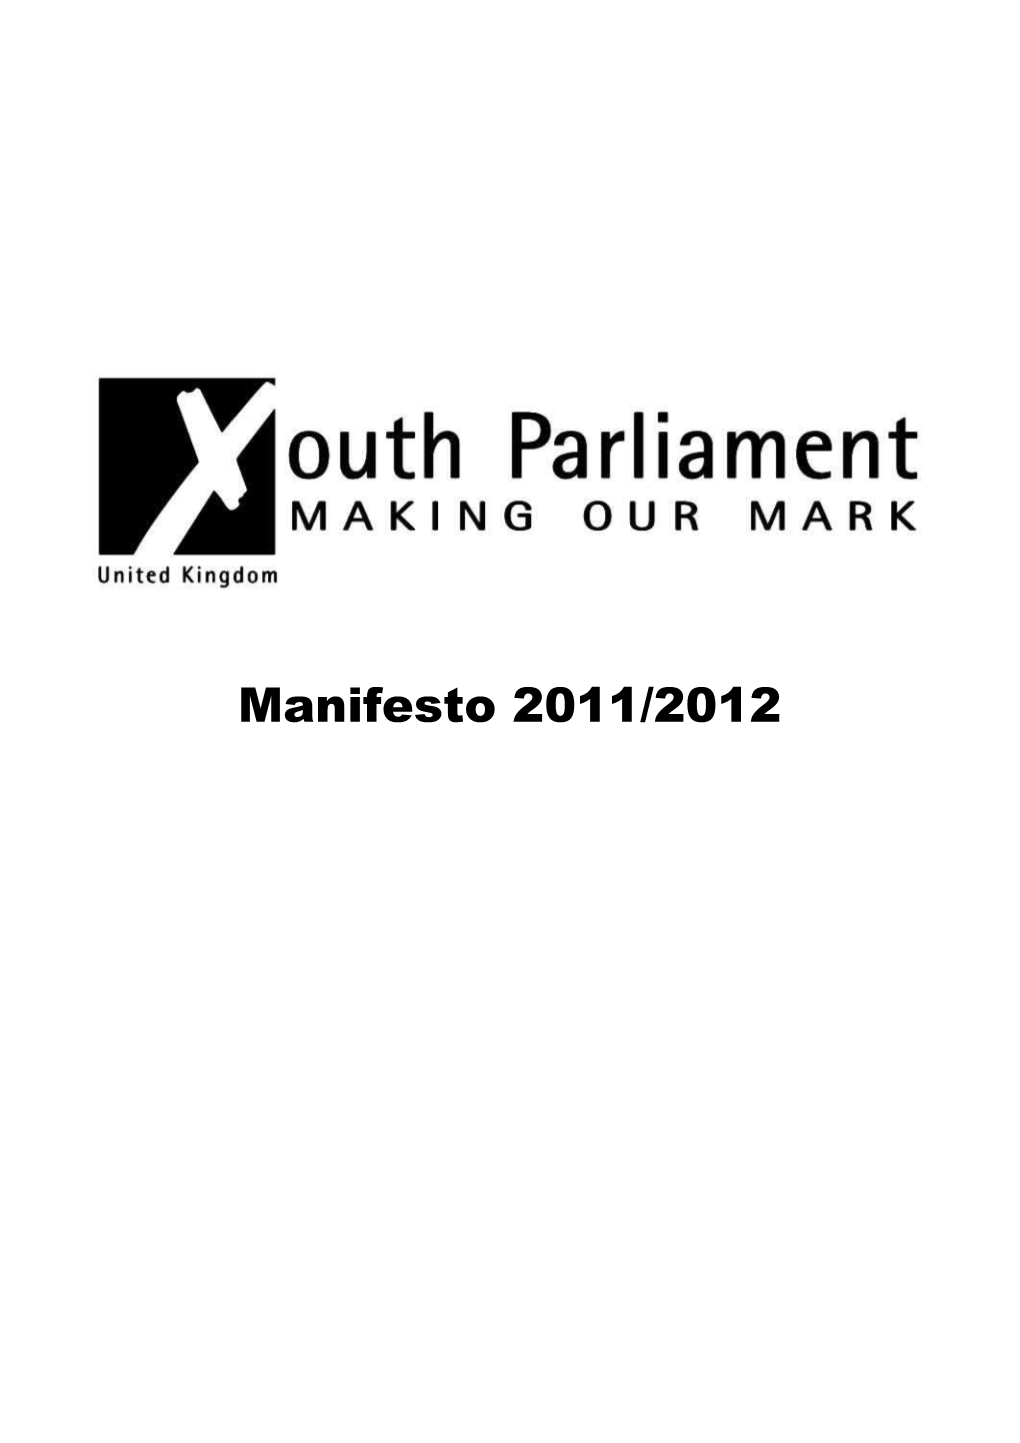 UK Youth Parliament Manifesto Statements